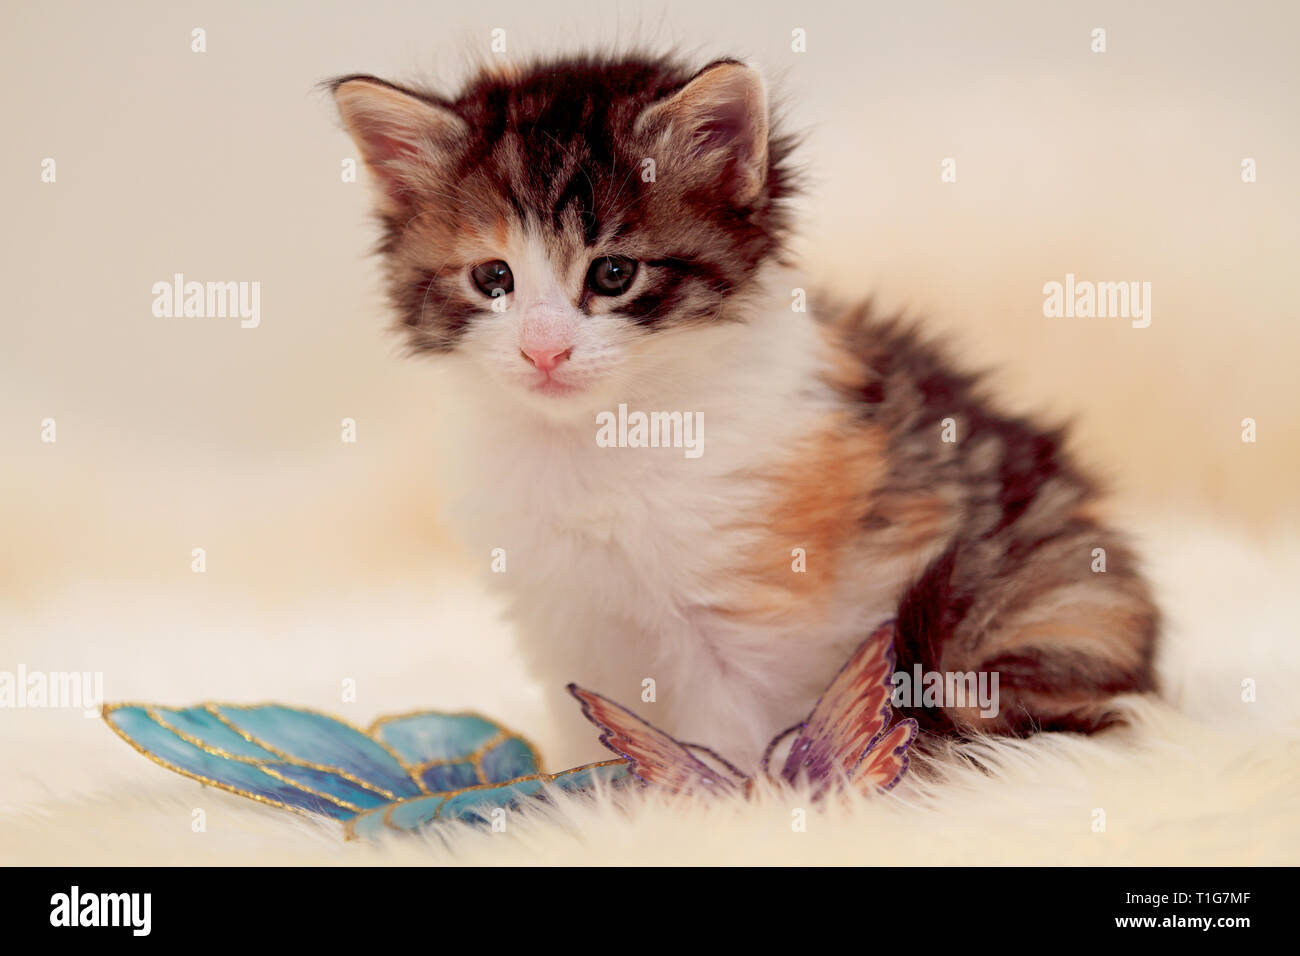 Sweet norwegian forest cat kitten sitting on sheep skin in studio portrait Stock Photo